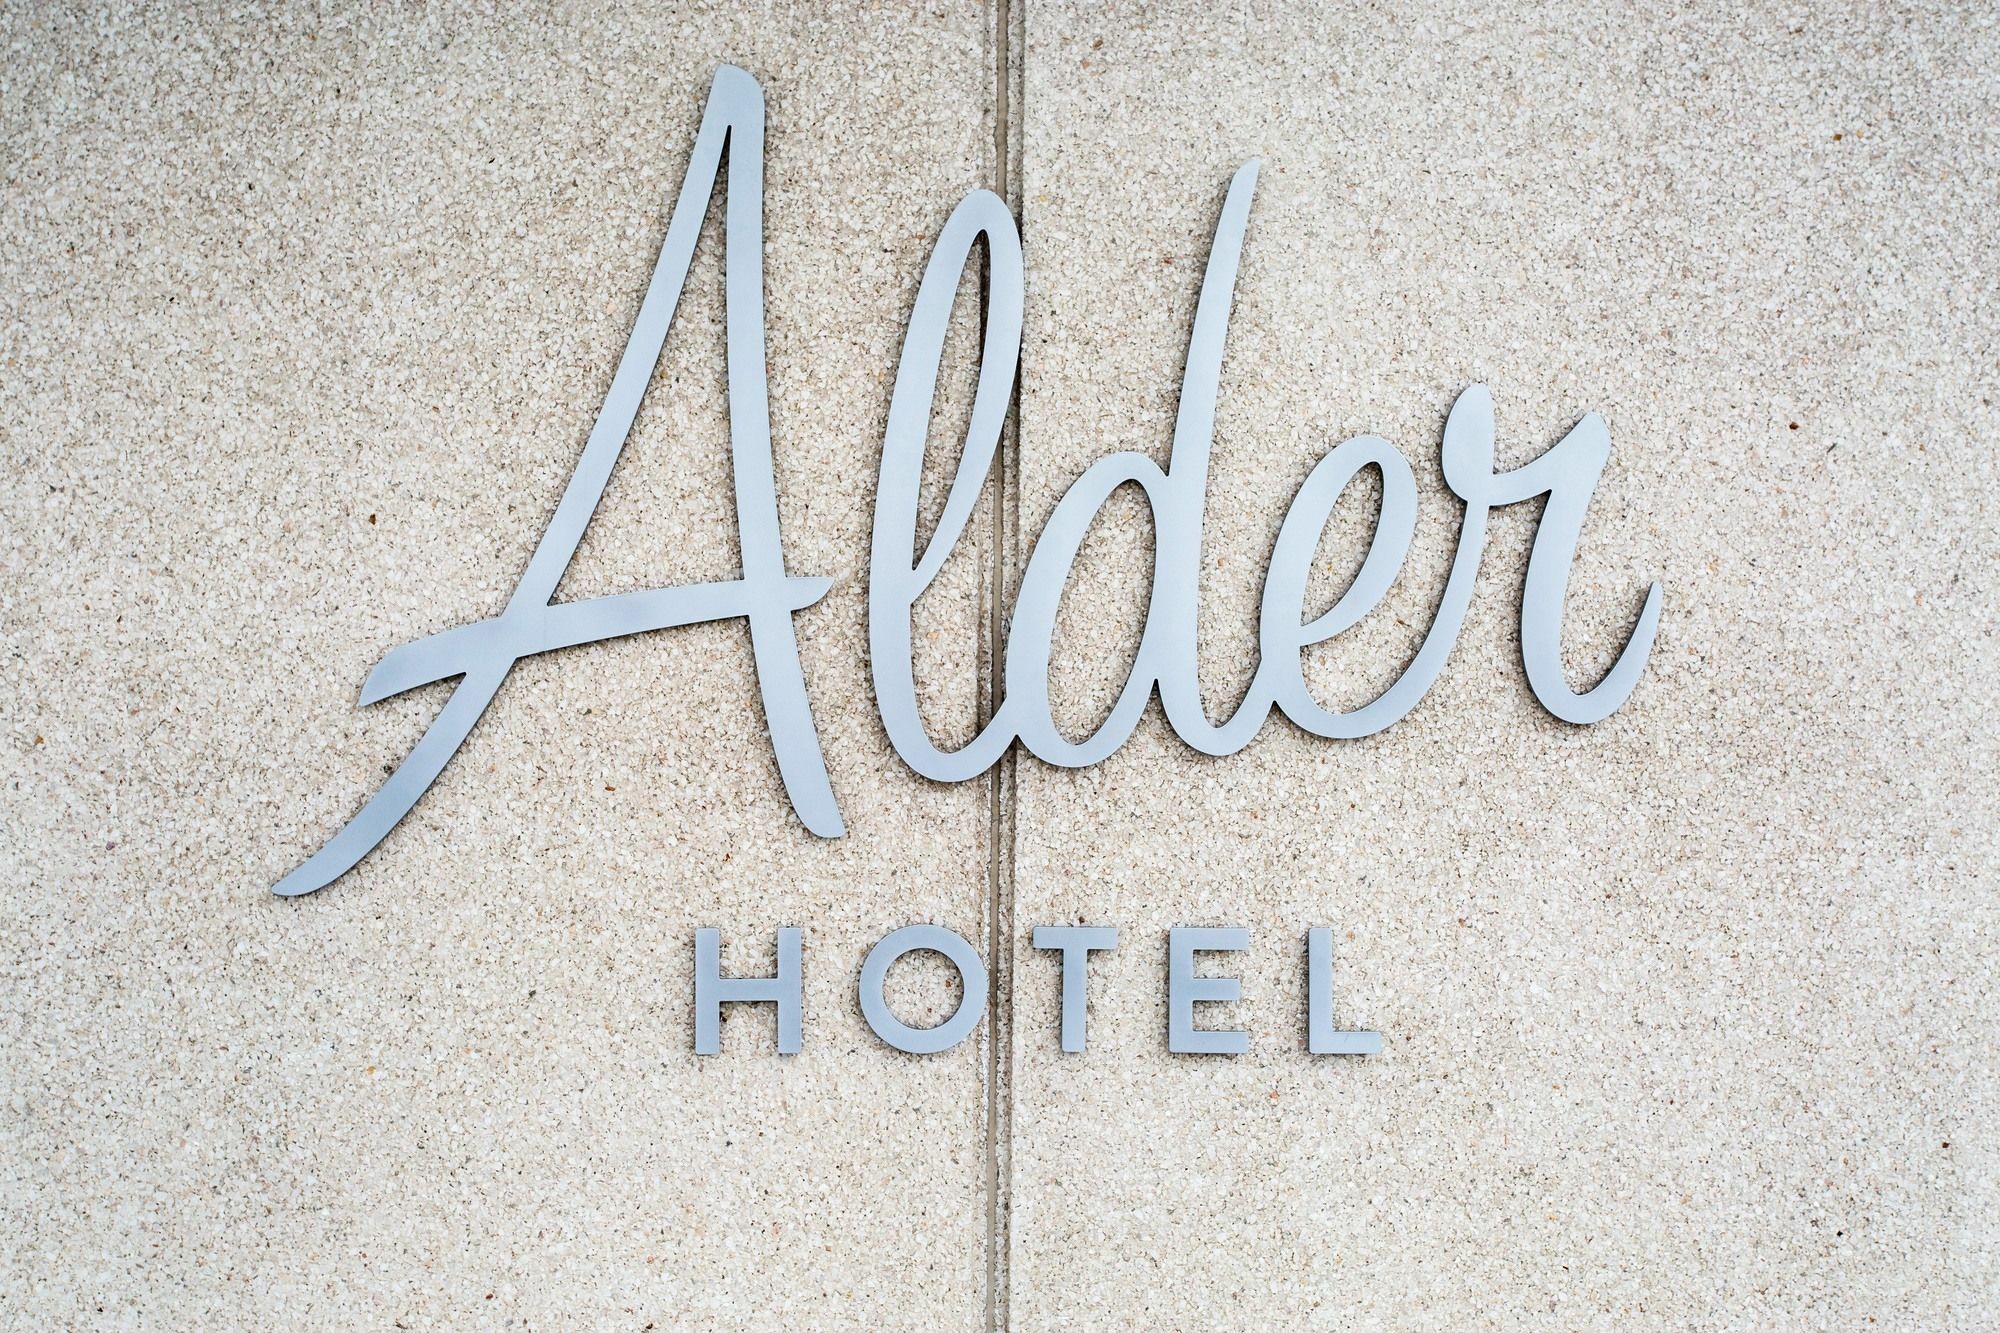 Alder Hotel Uptown New Orleans Esterno foto